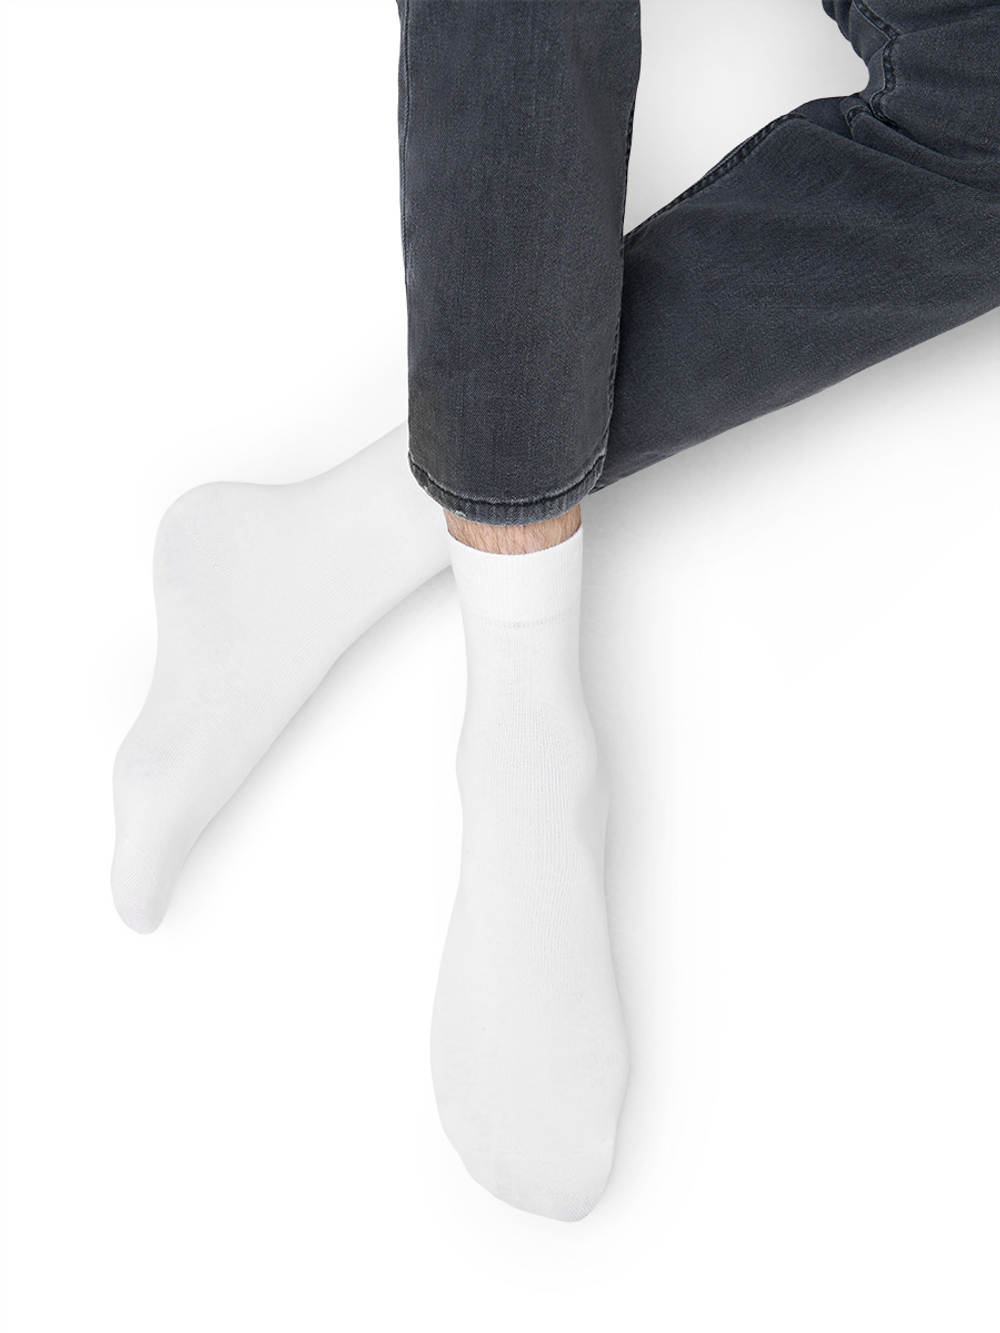 OMSA ECO 401 (мужские носки)